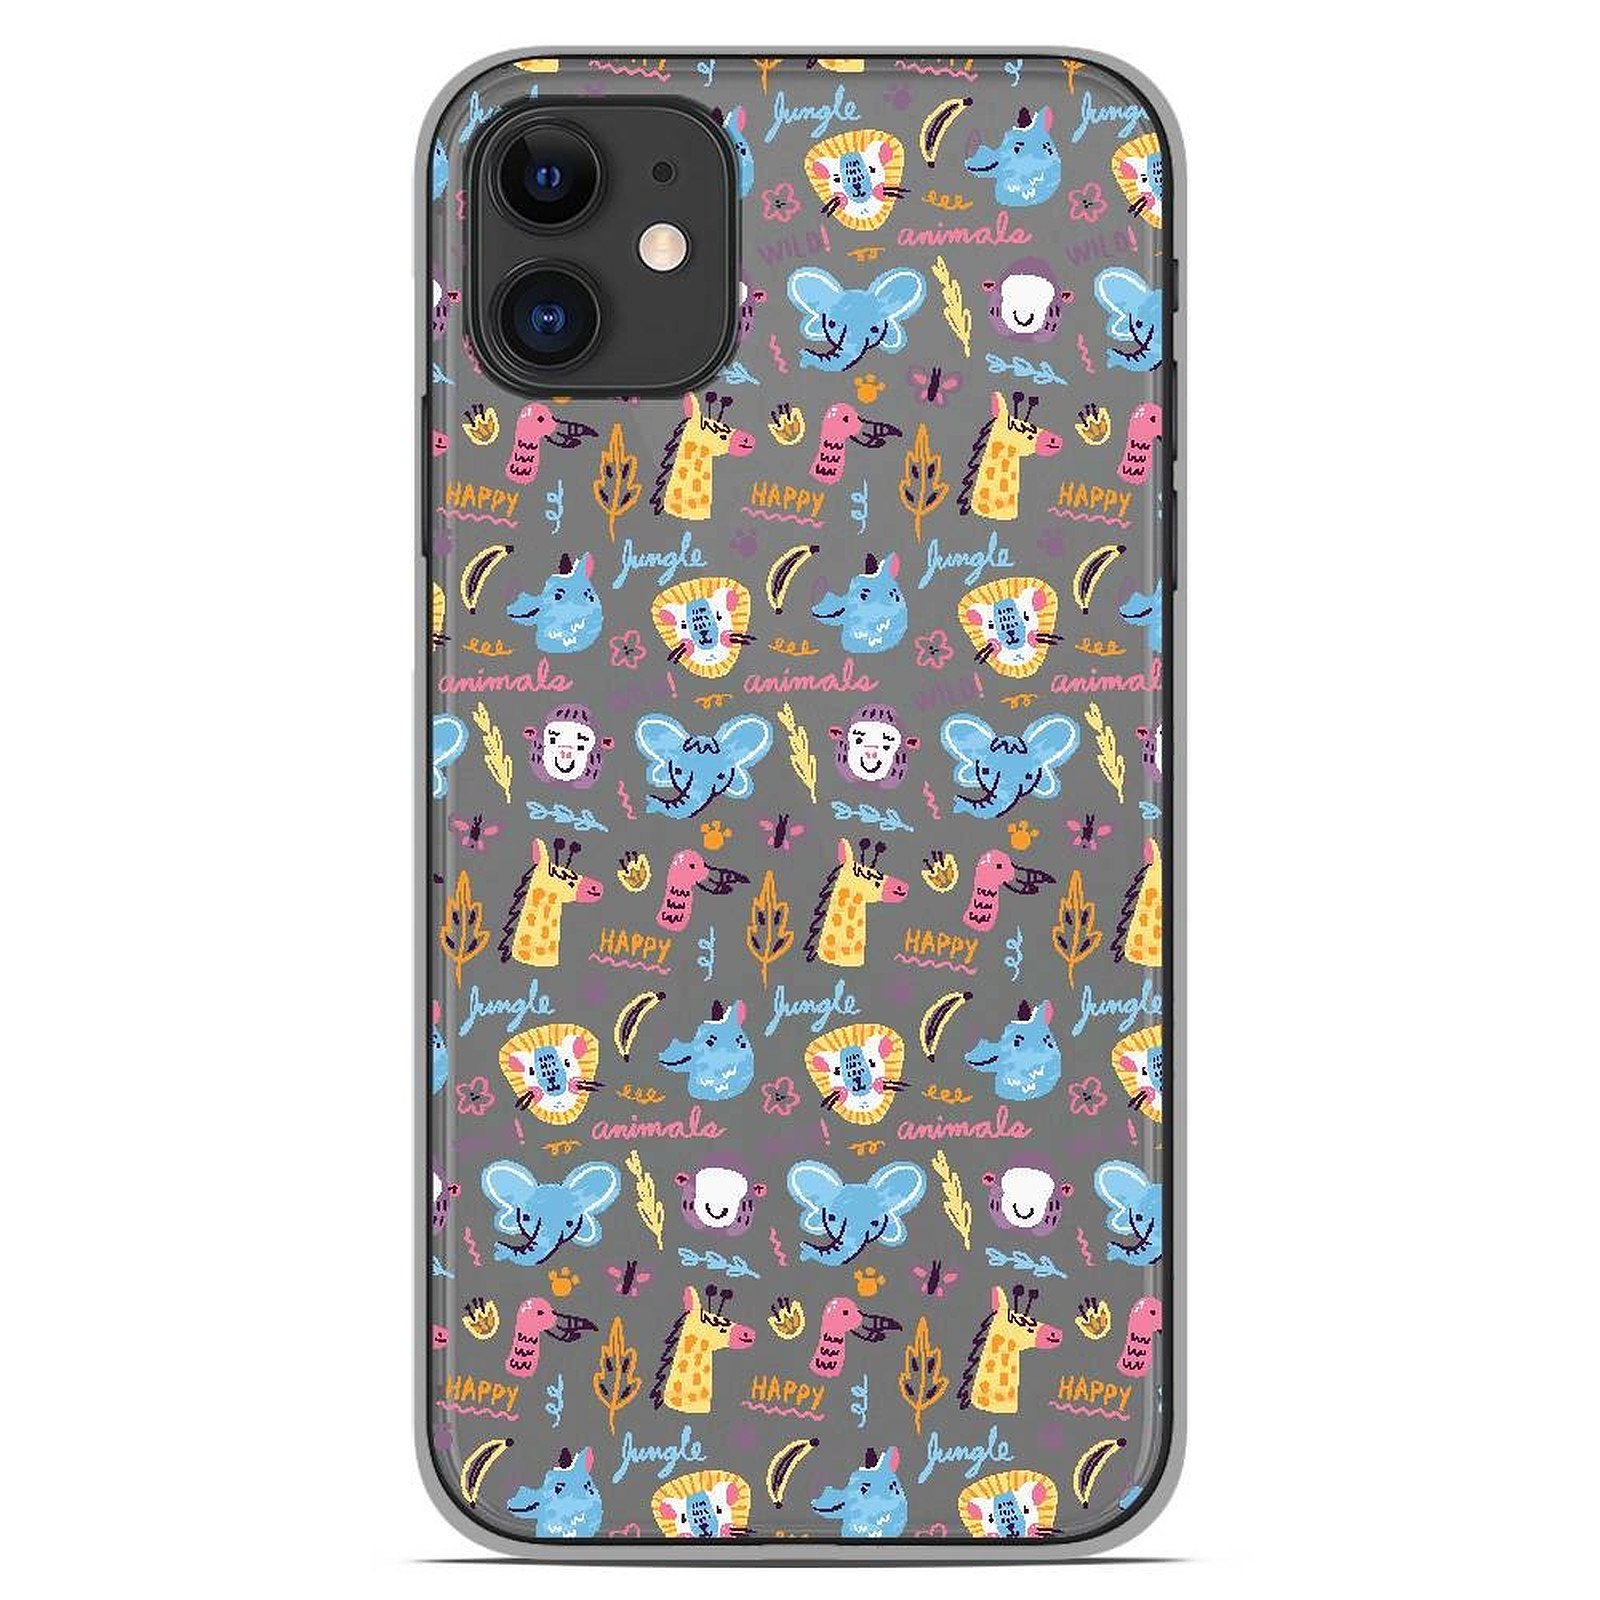 1001 Coques Coque silicone gel Apple iPhone 11 motif Happy animals - Coque telephone 1001Coques